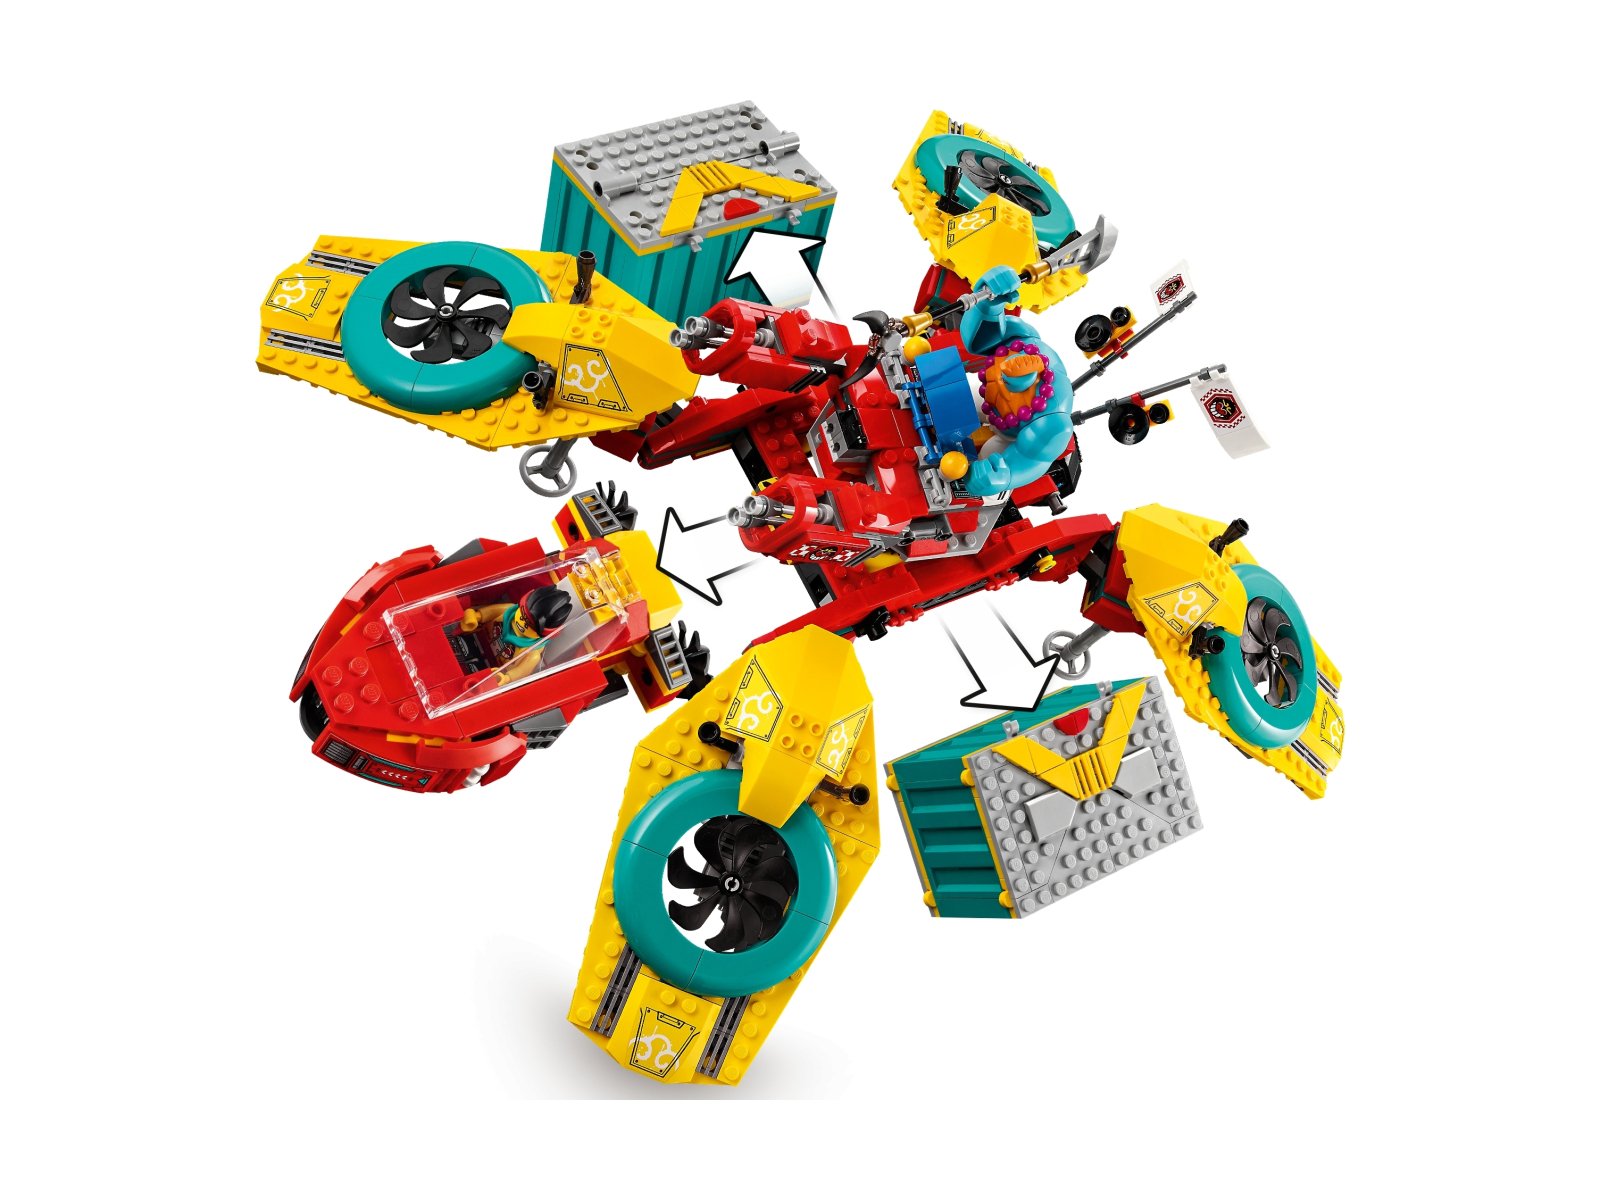 LEGO 80023 Monkie Kid Dronkopter ekipy Monkie Kida